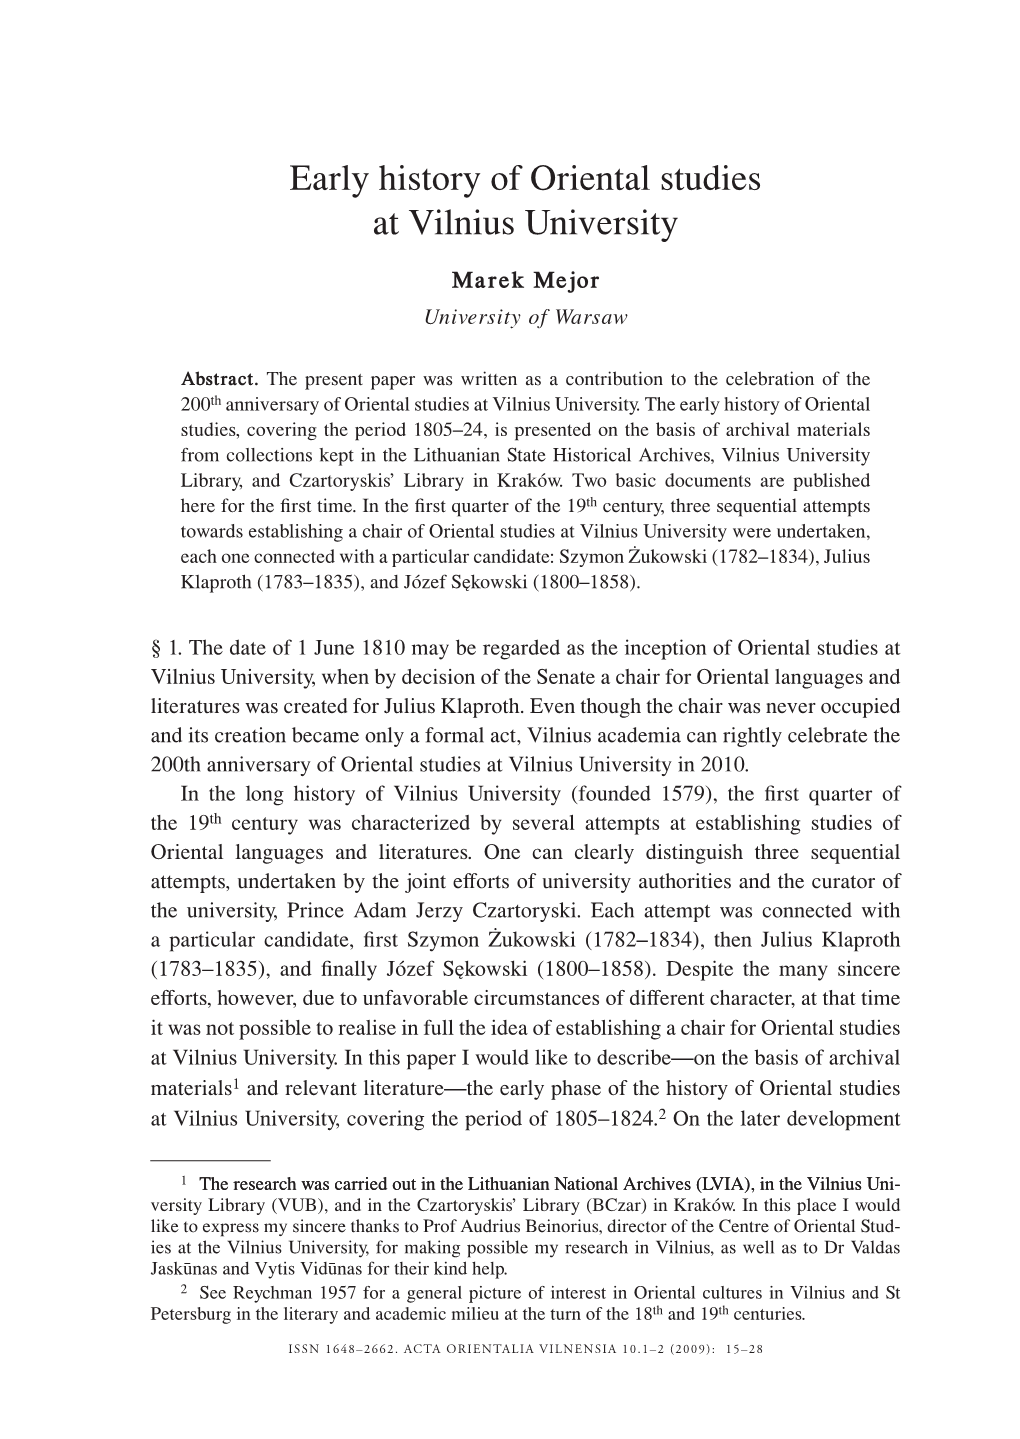 Early History of Oriental Studies at Vilnius University